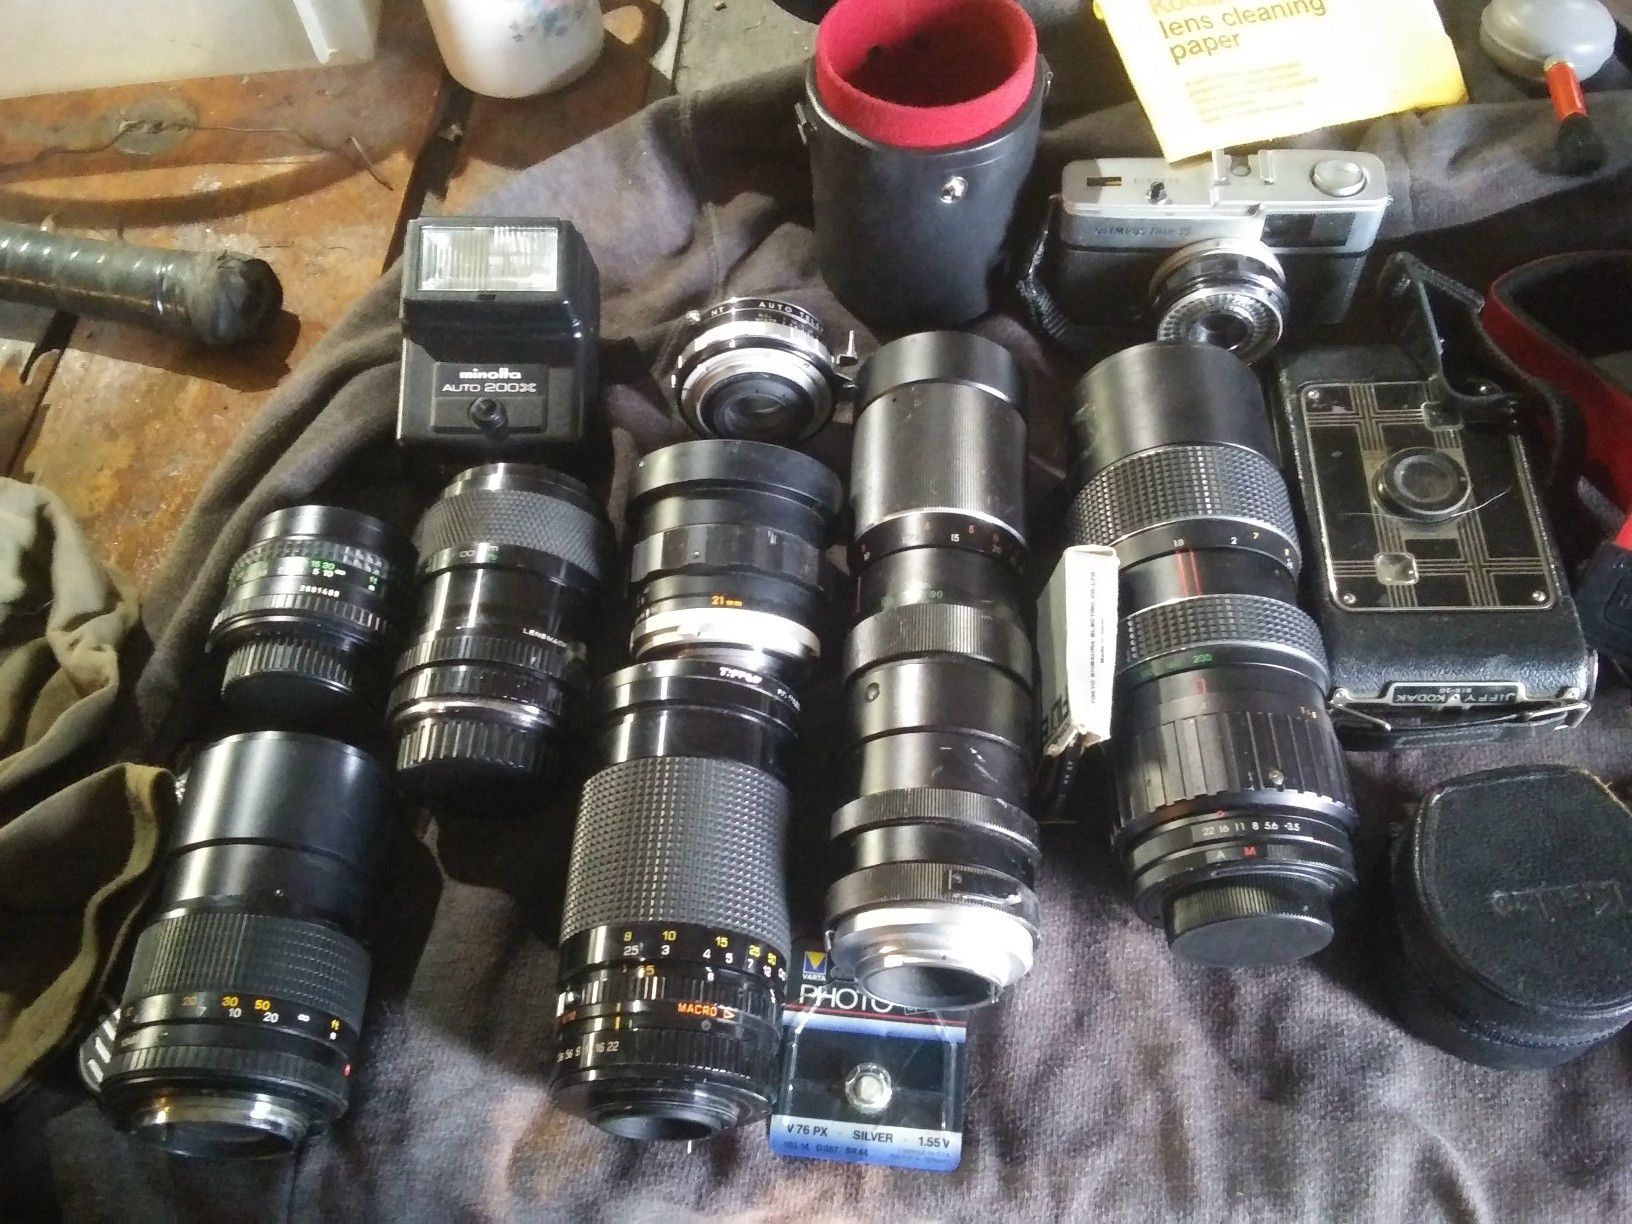 Professional camera equipment